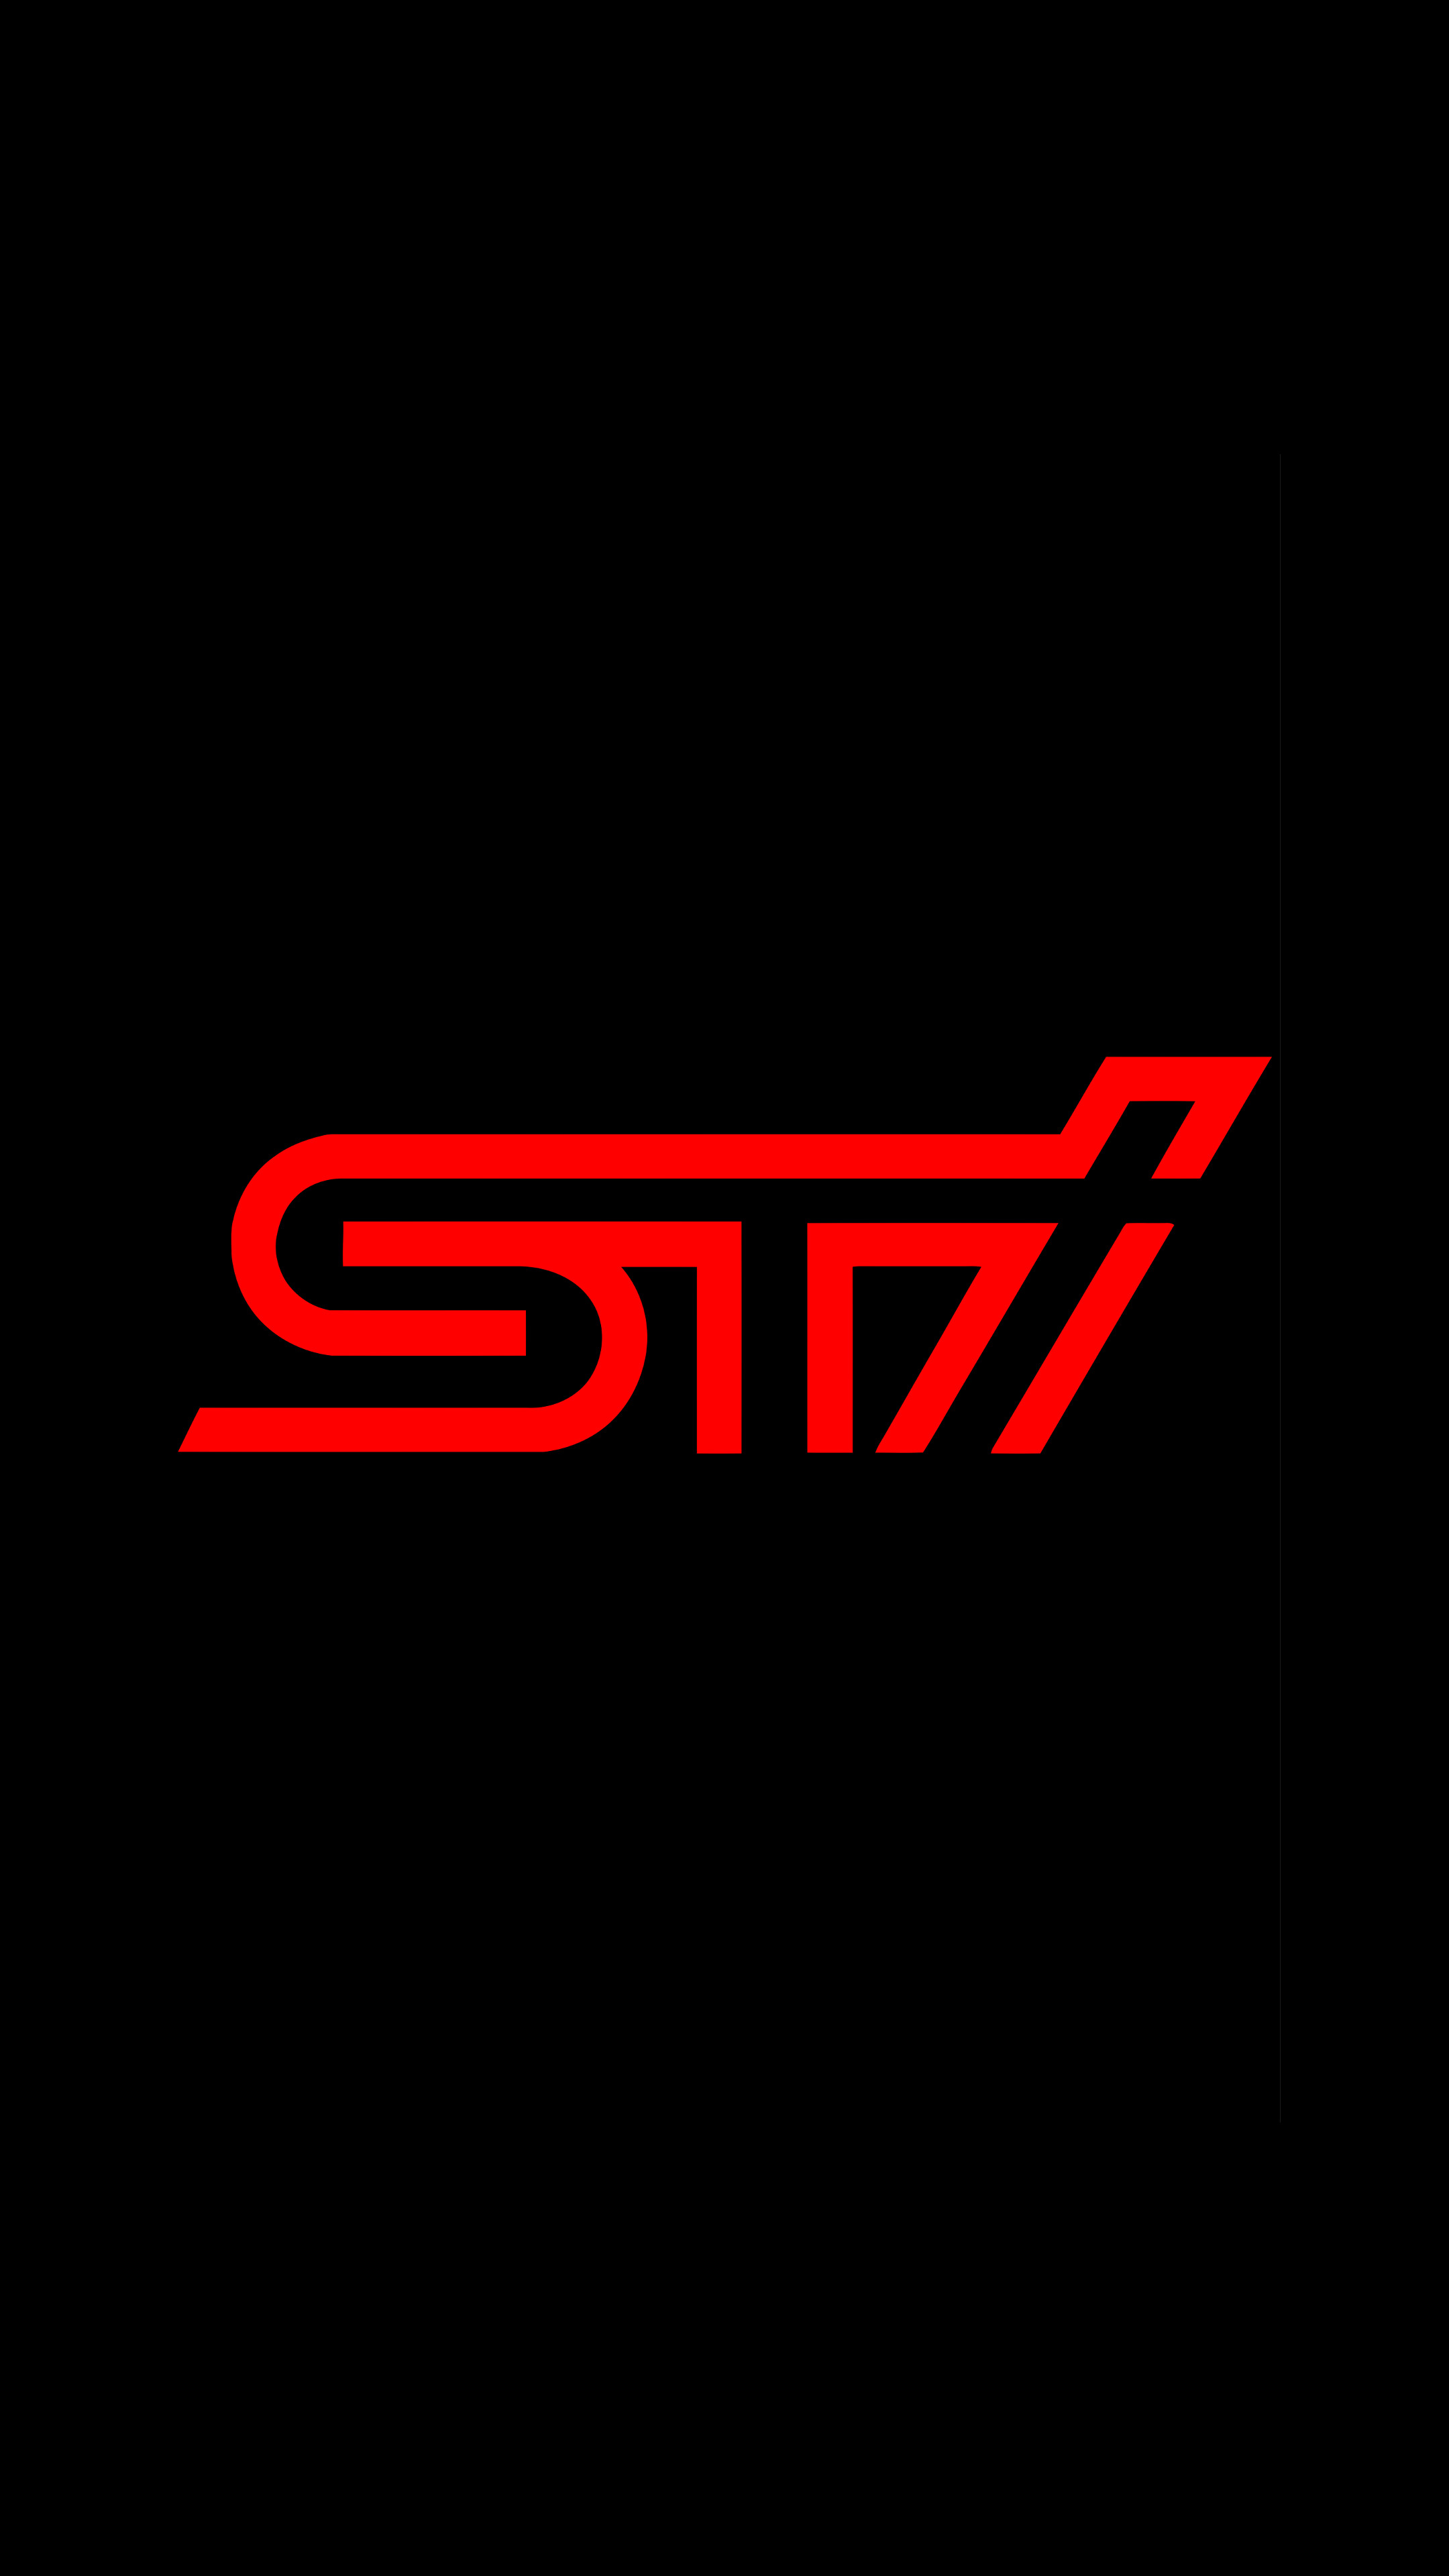 Subaru Sti Logo Wallpaper Image